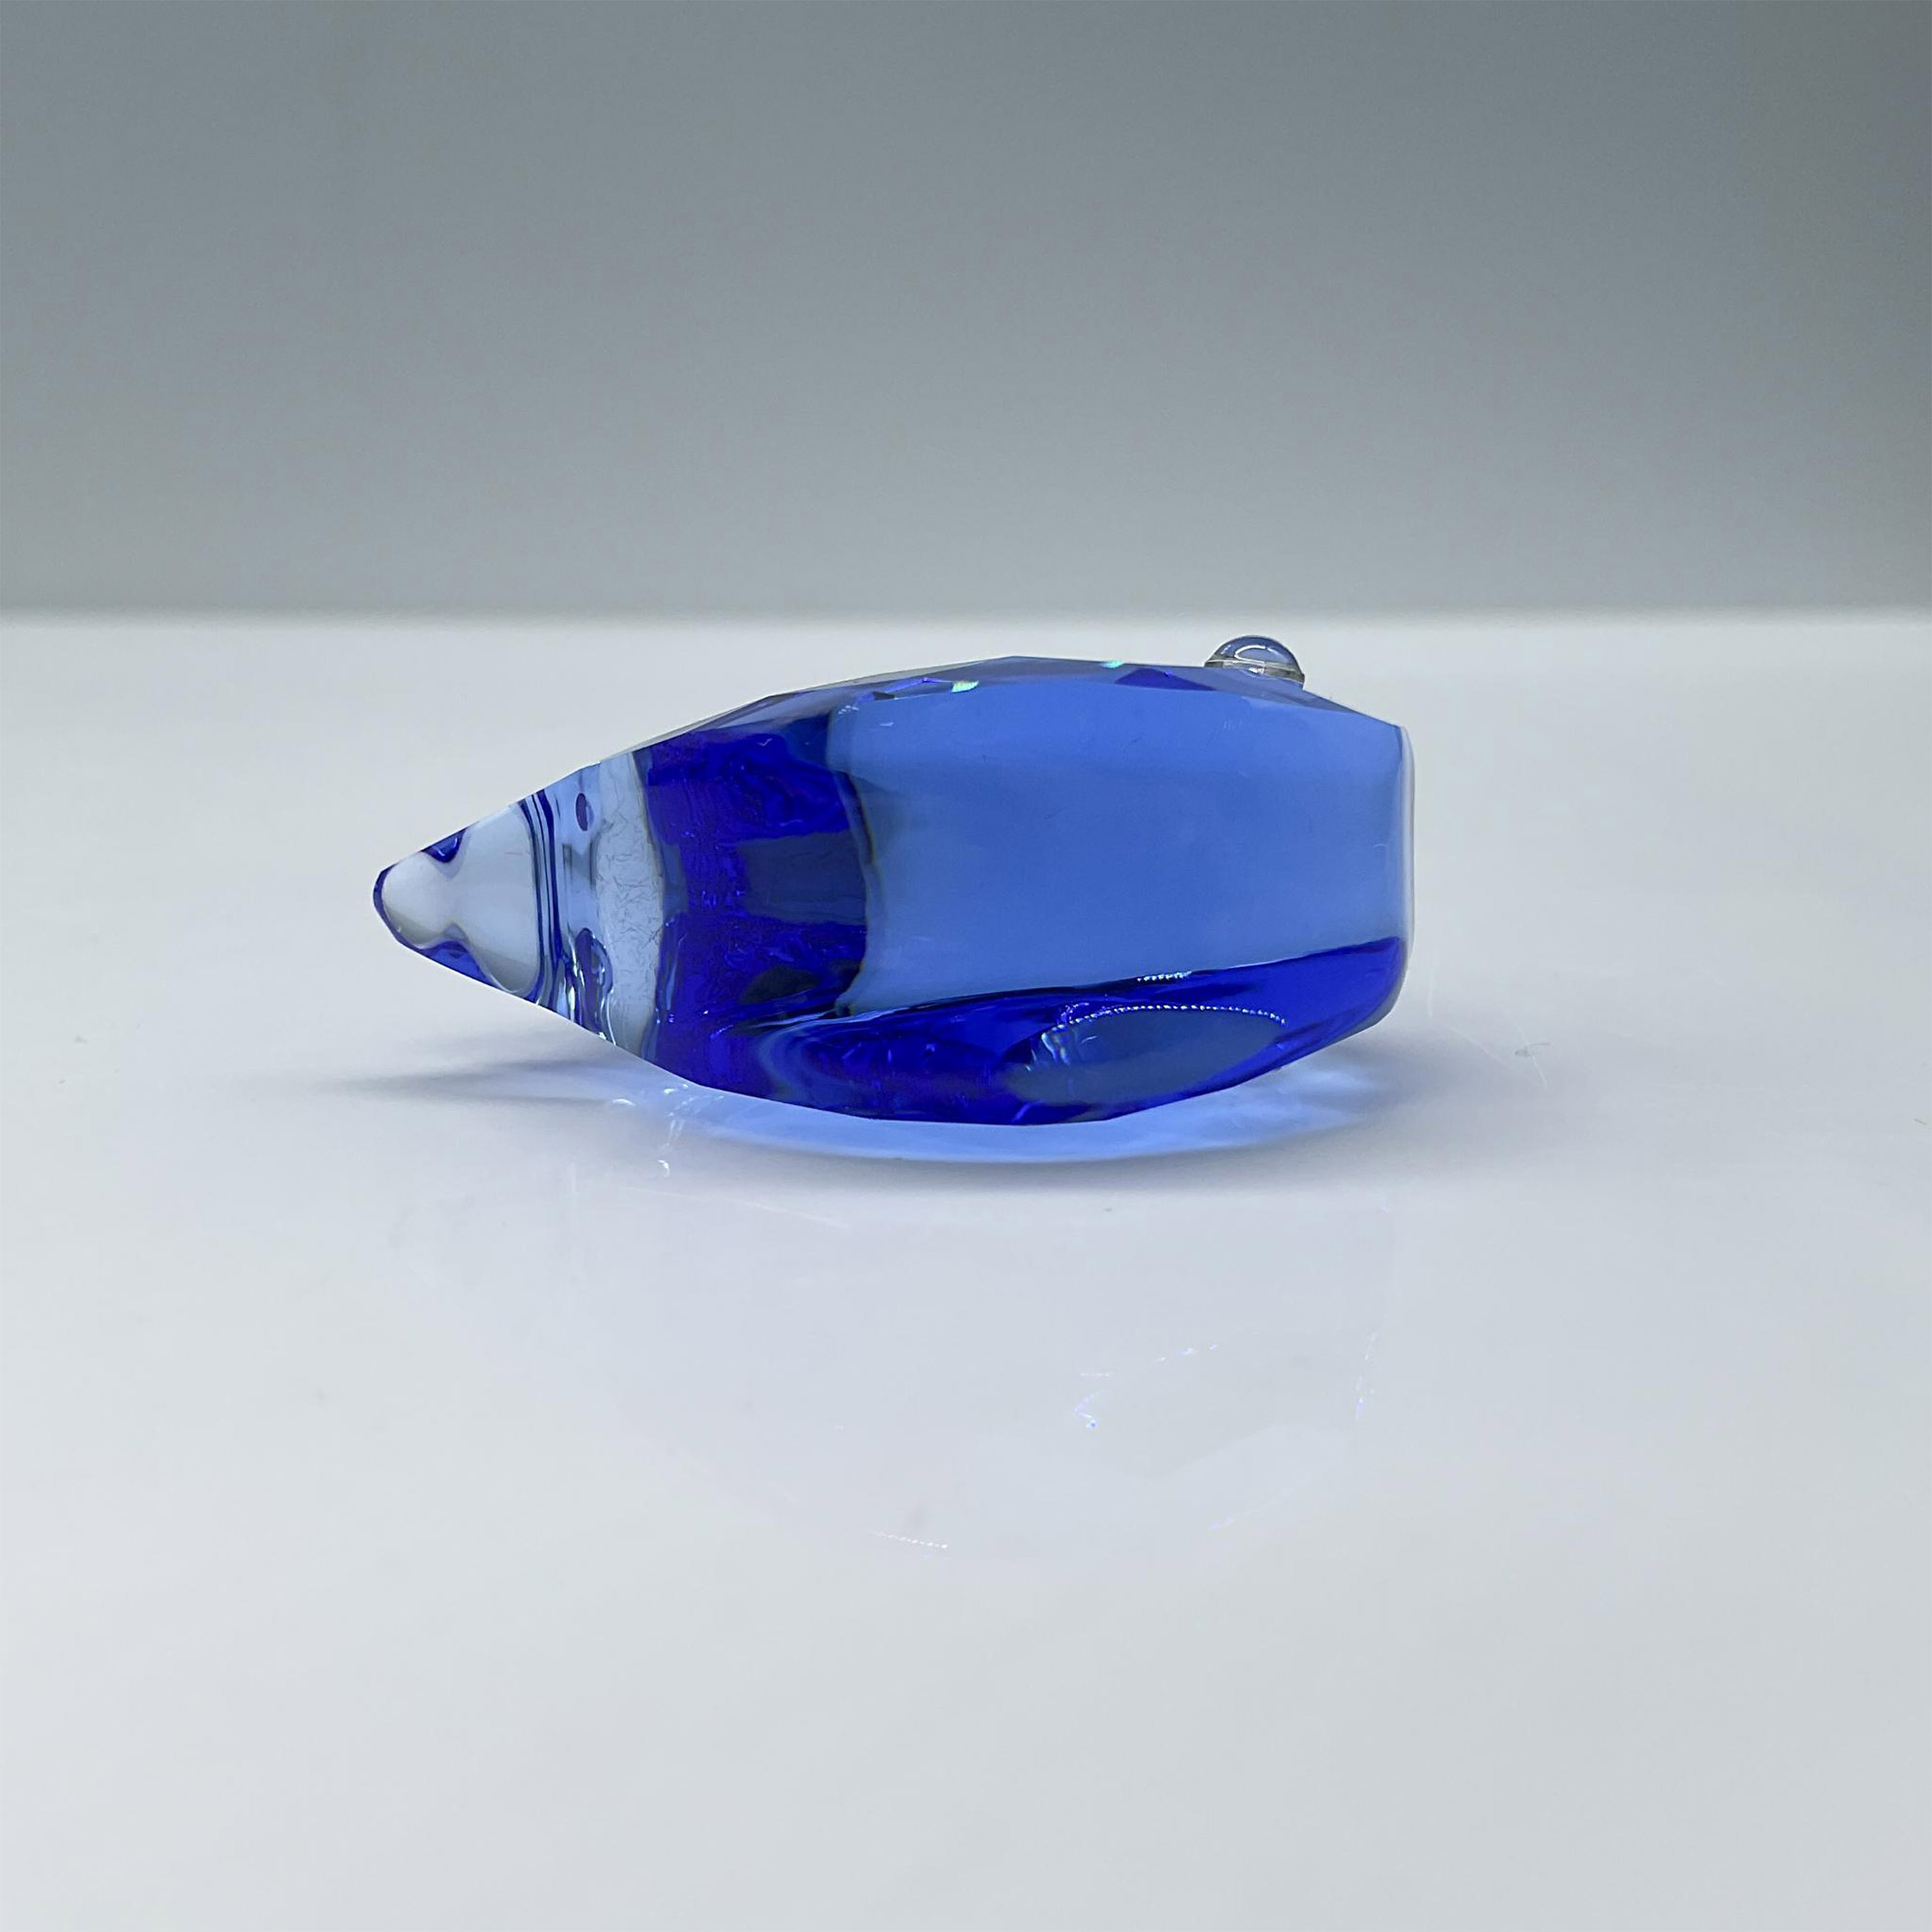 Swarovski Crystal Figurine, Walter the Whale - Image 3 of 4